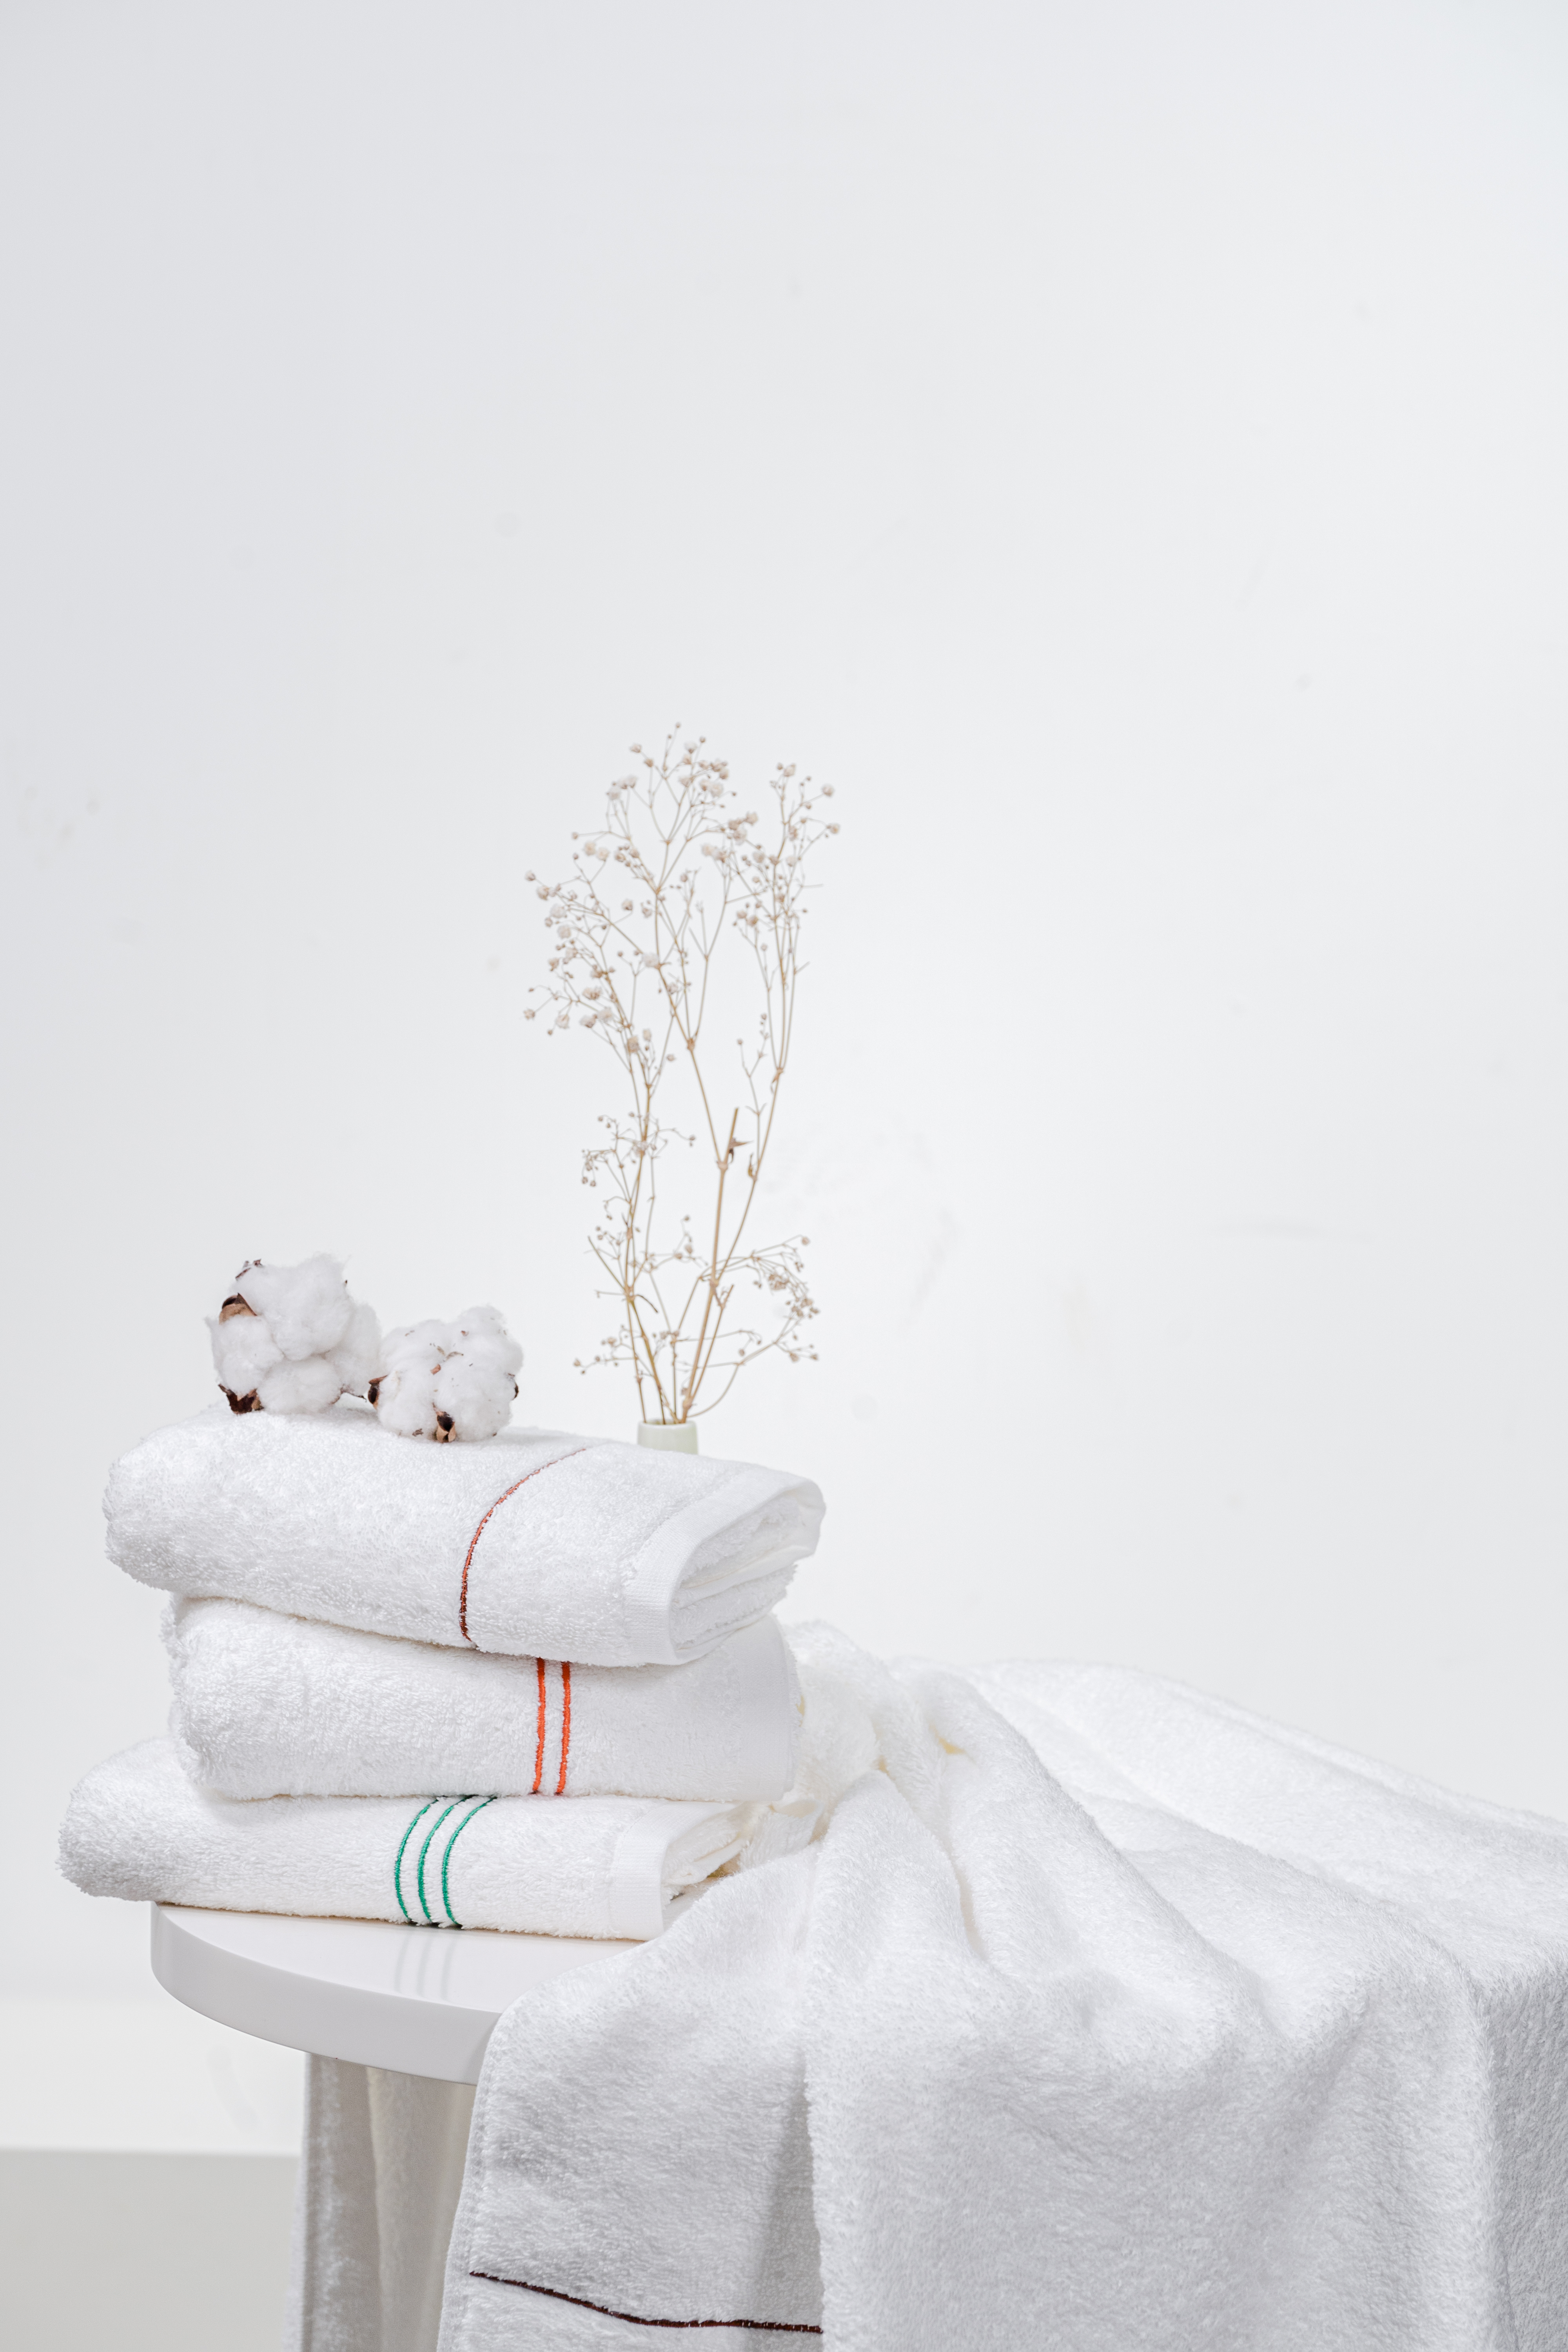 100 Sets ELIYA Brand Hotel Style Hand Towels Factory-1 8